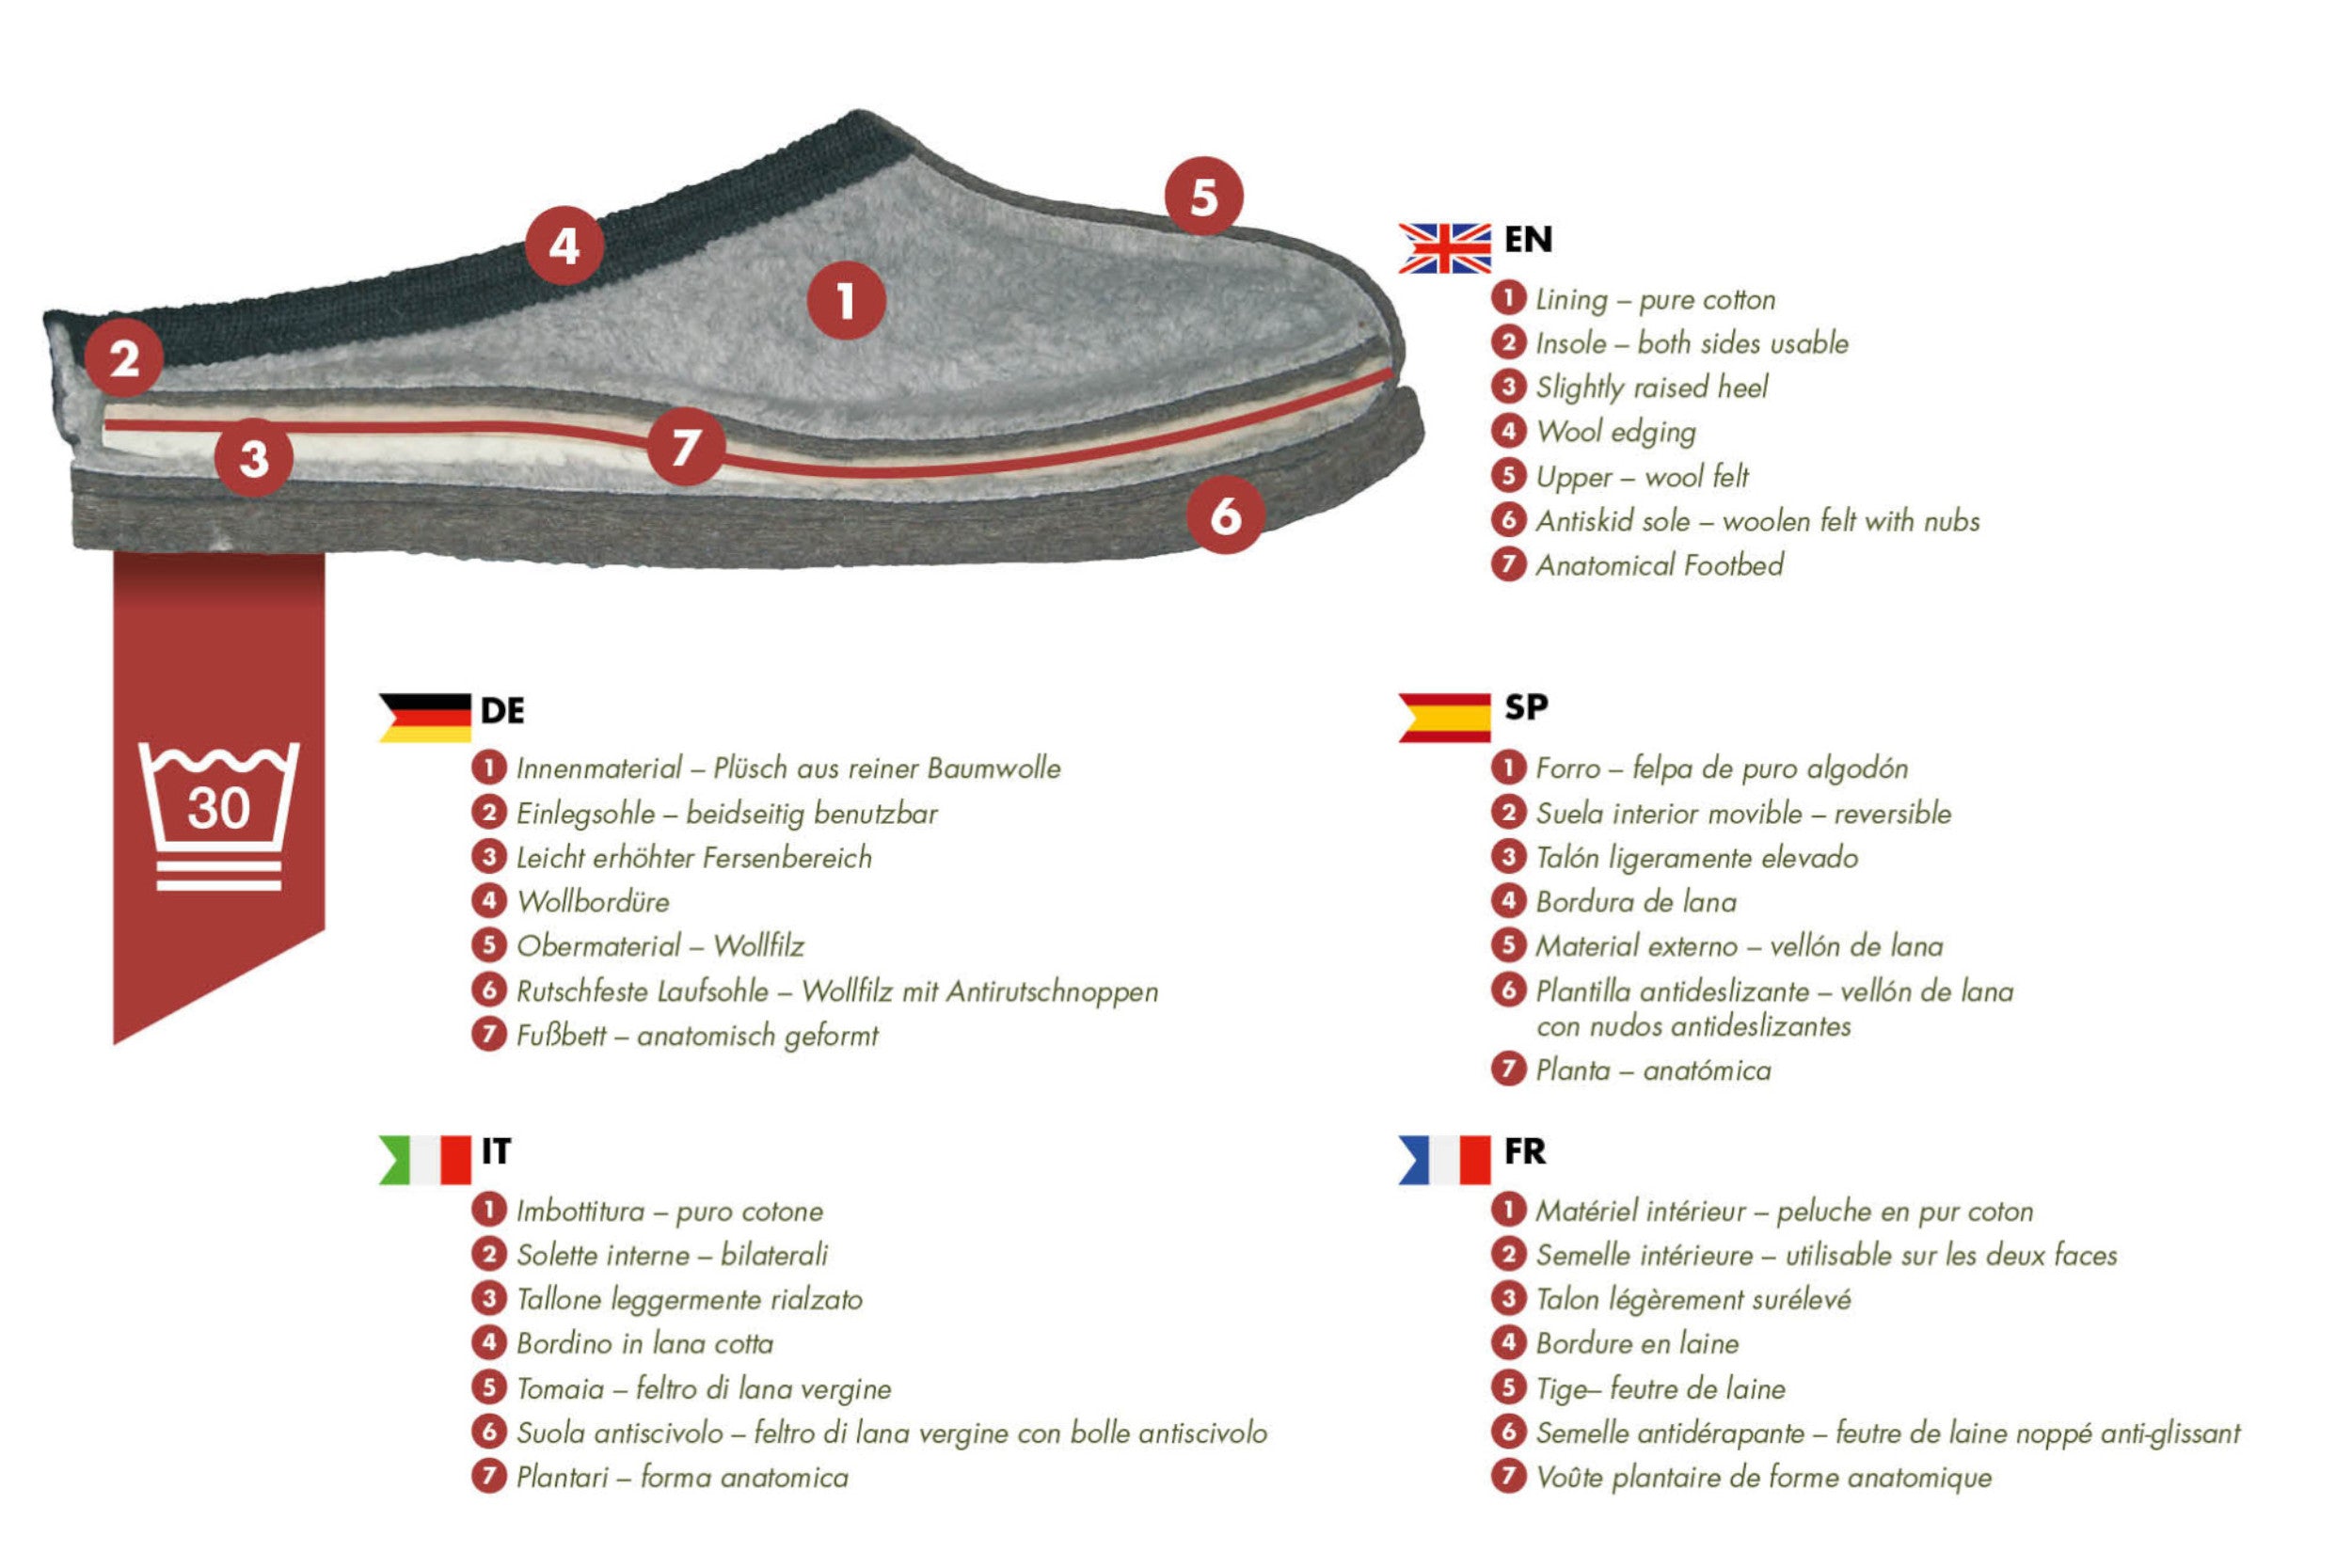 Pantofole in feltro BAITA - grigio con bordo rosso